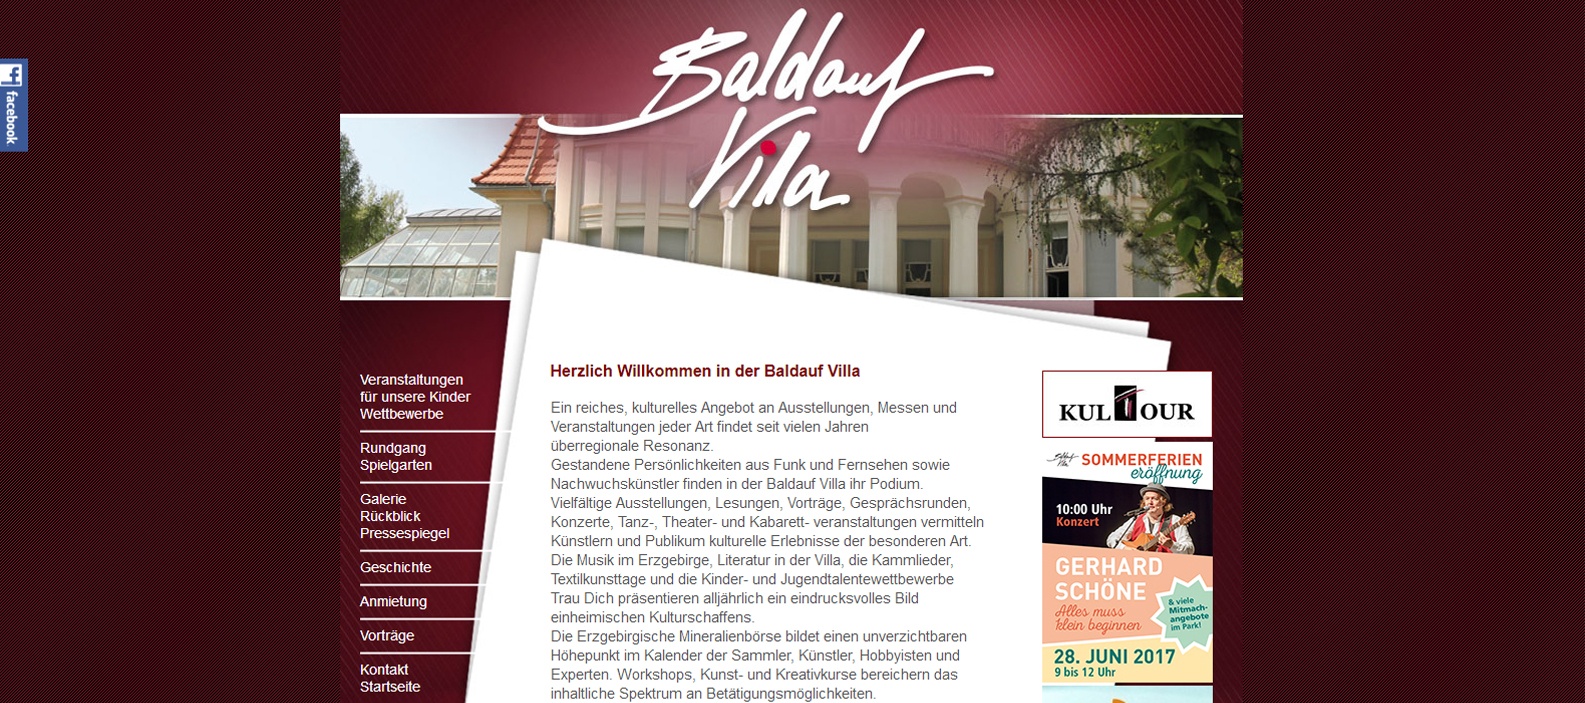 www.baldauf-villa.de